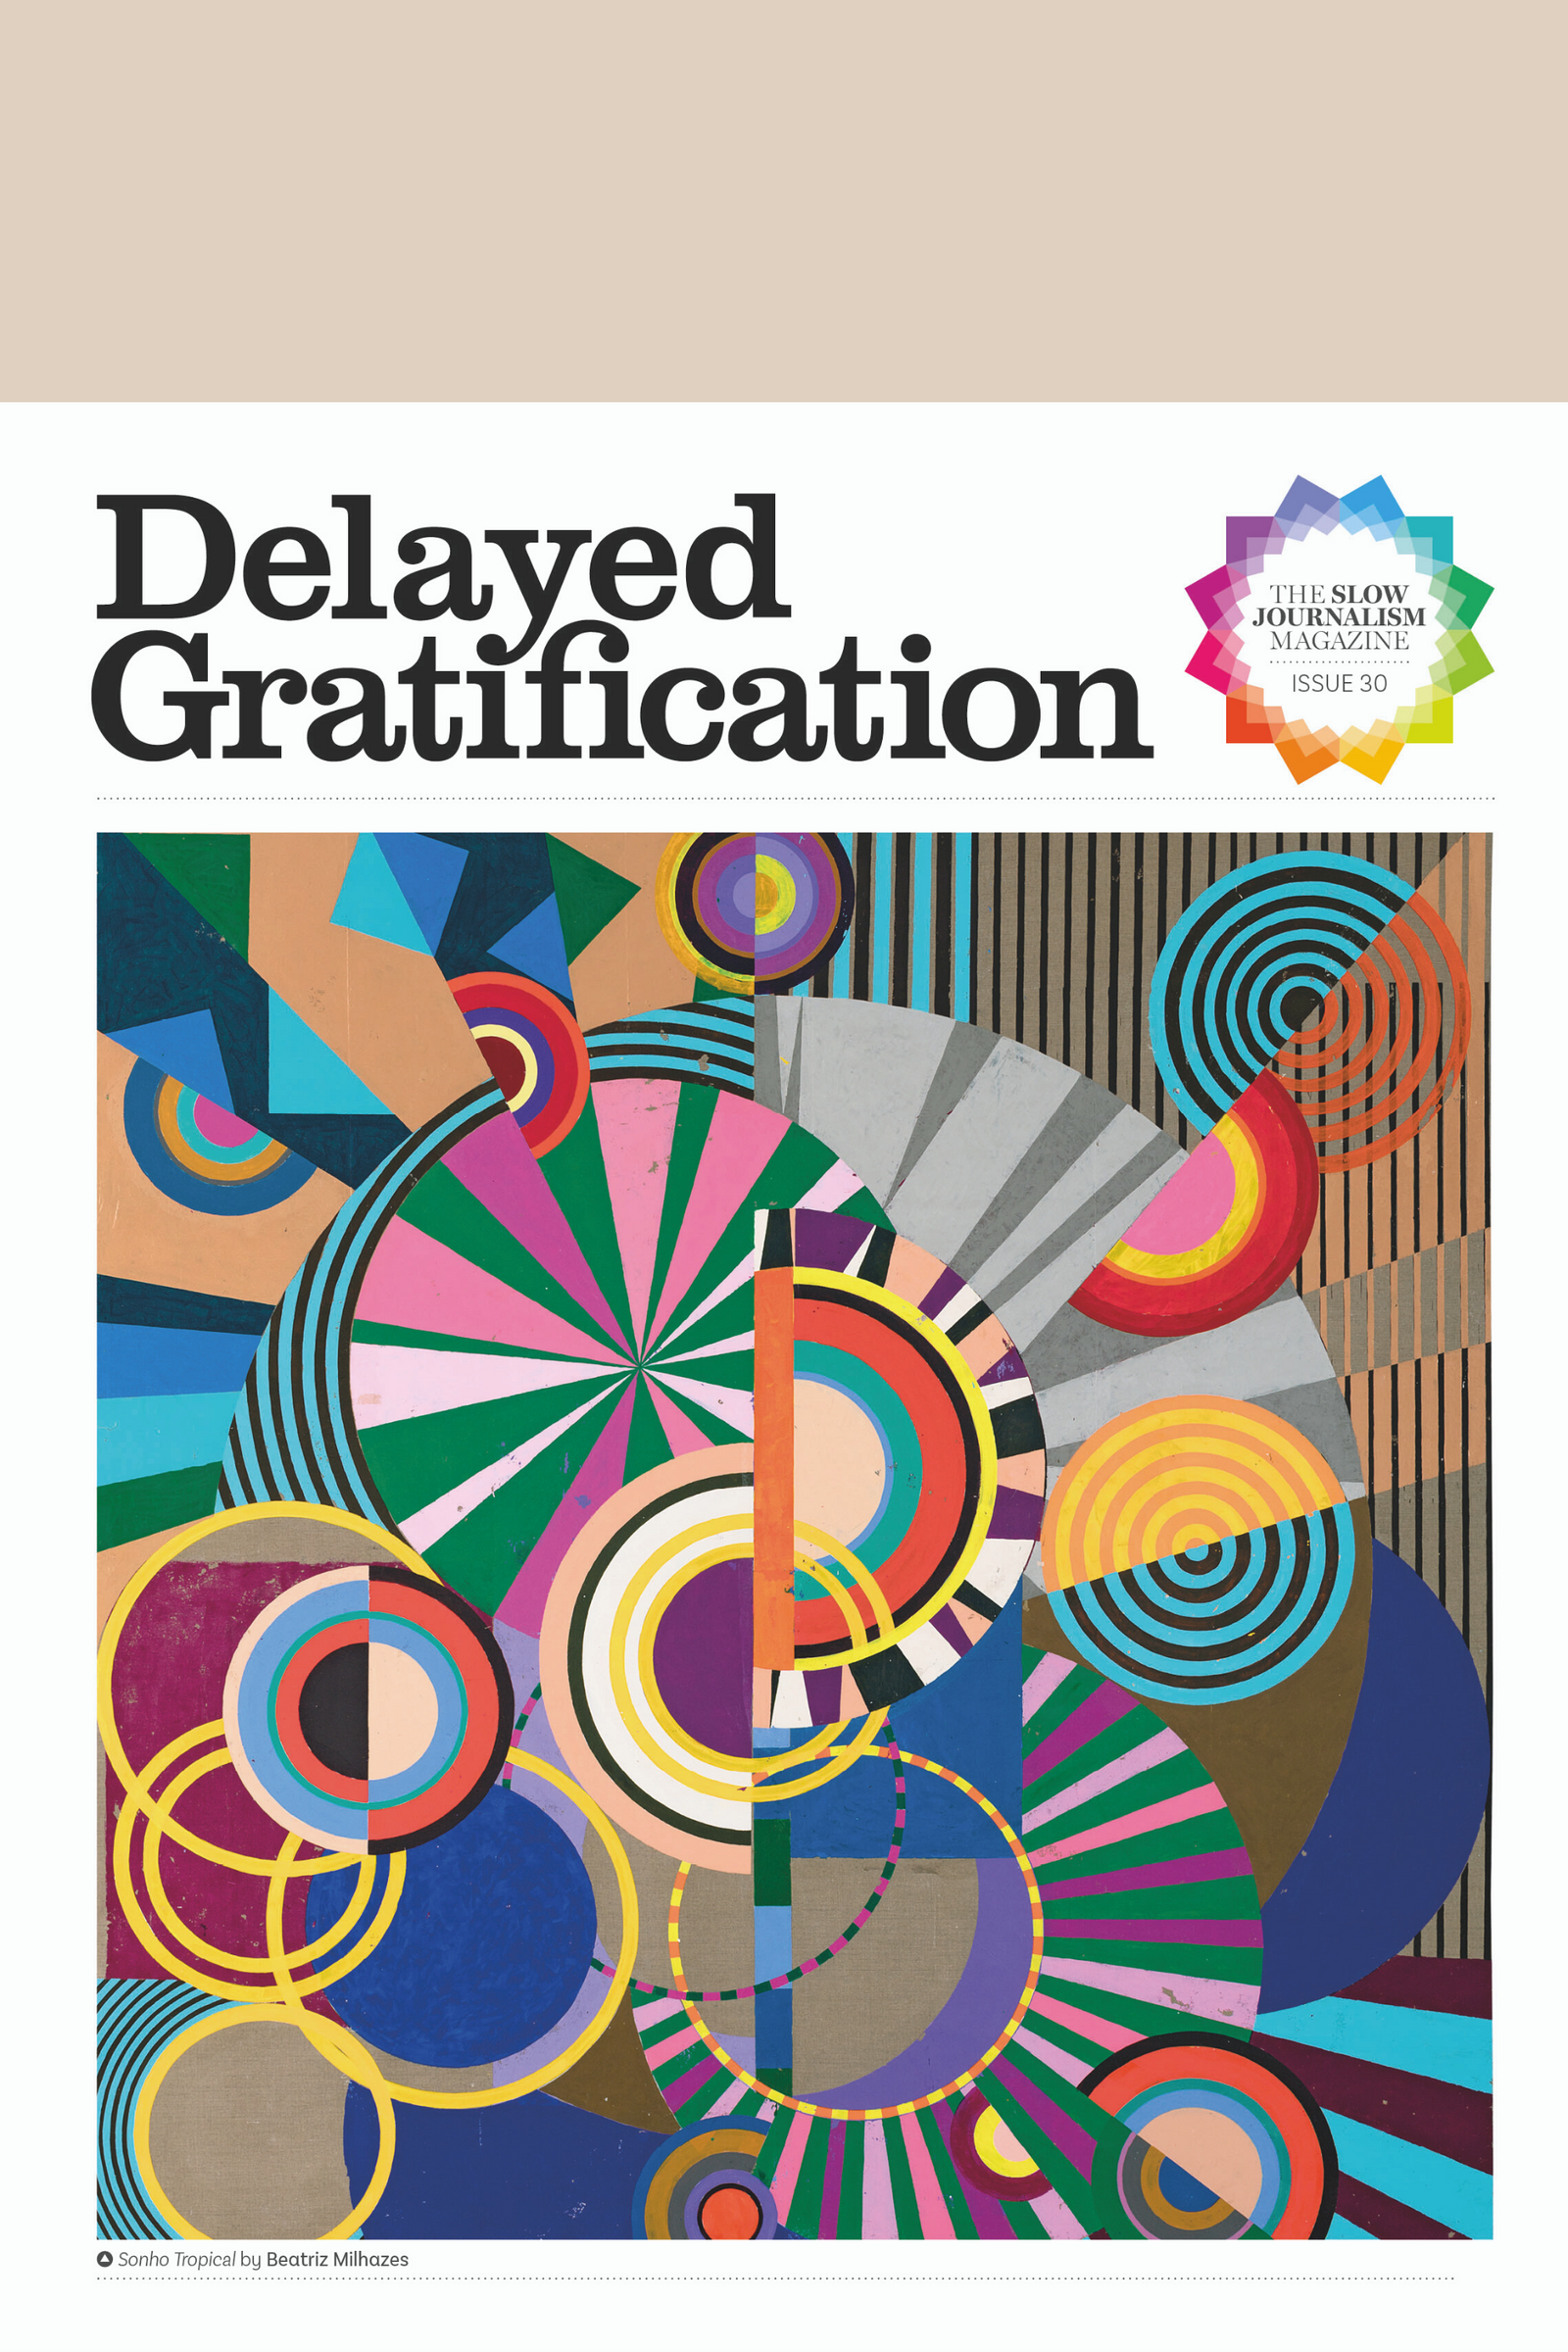 Delayed gratification: a arte de saber esperar - Daily MeuCapital